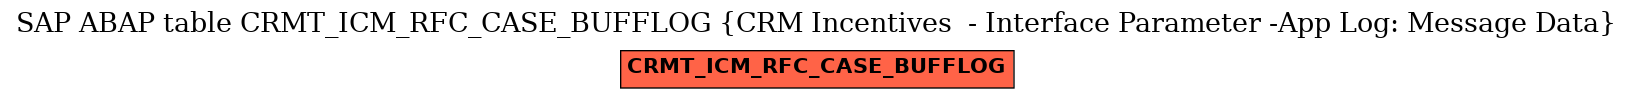 E-R Diagram for table CRMT_ICM_RFC_CASE_BUFFLOG (CRM Incentives  - Interface Parameter -App Log: Message Data)